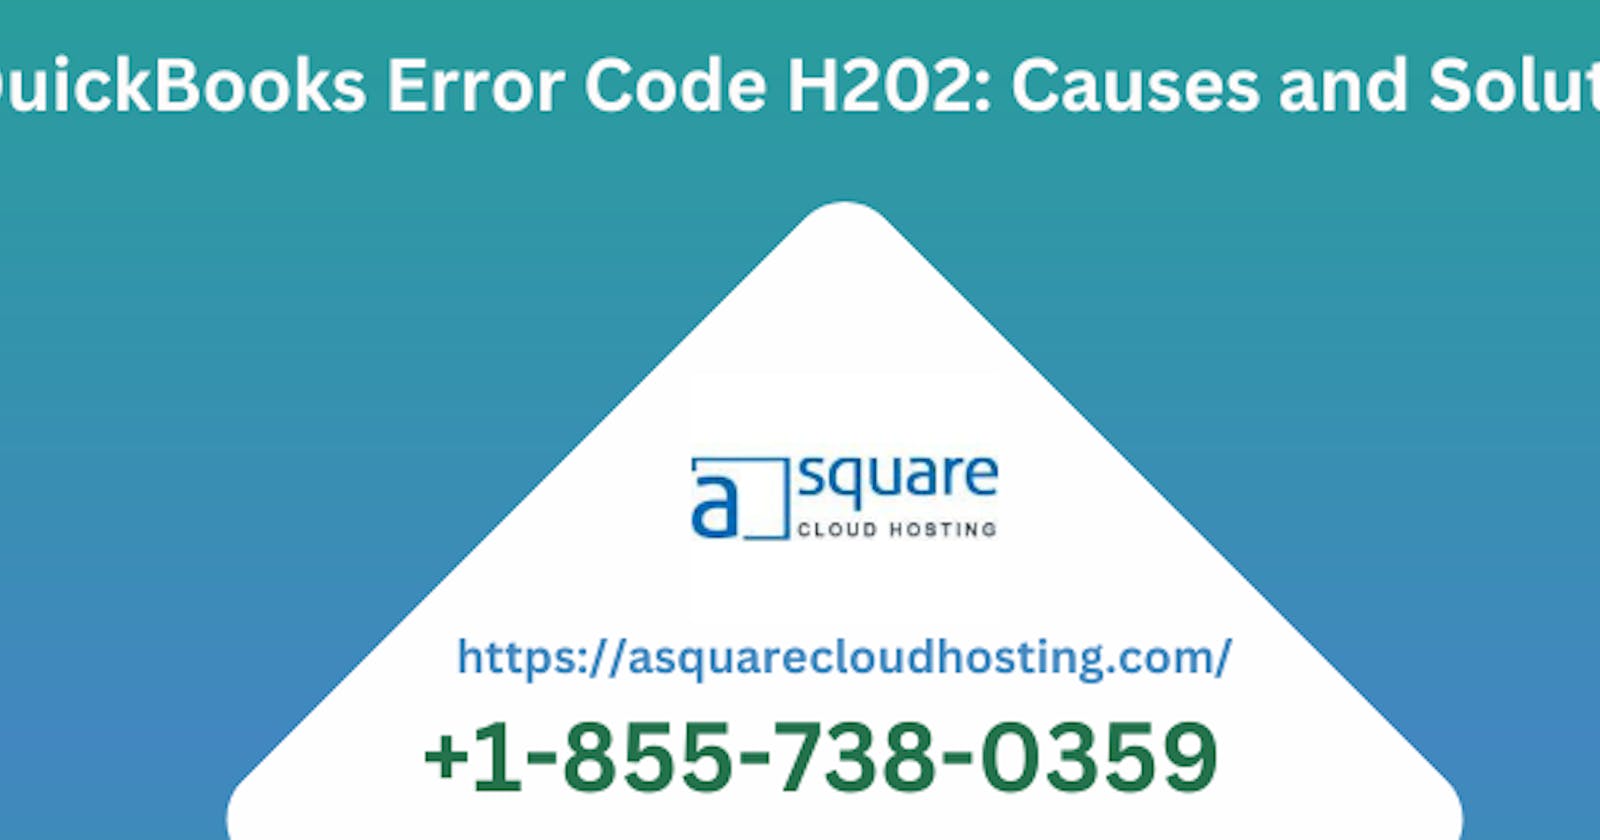 QuickBooks Error Code H202: Causes and Solutions